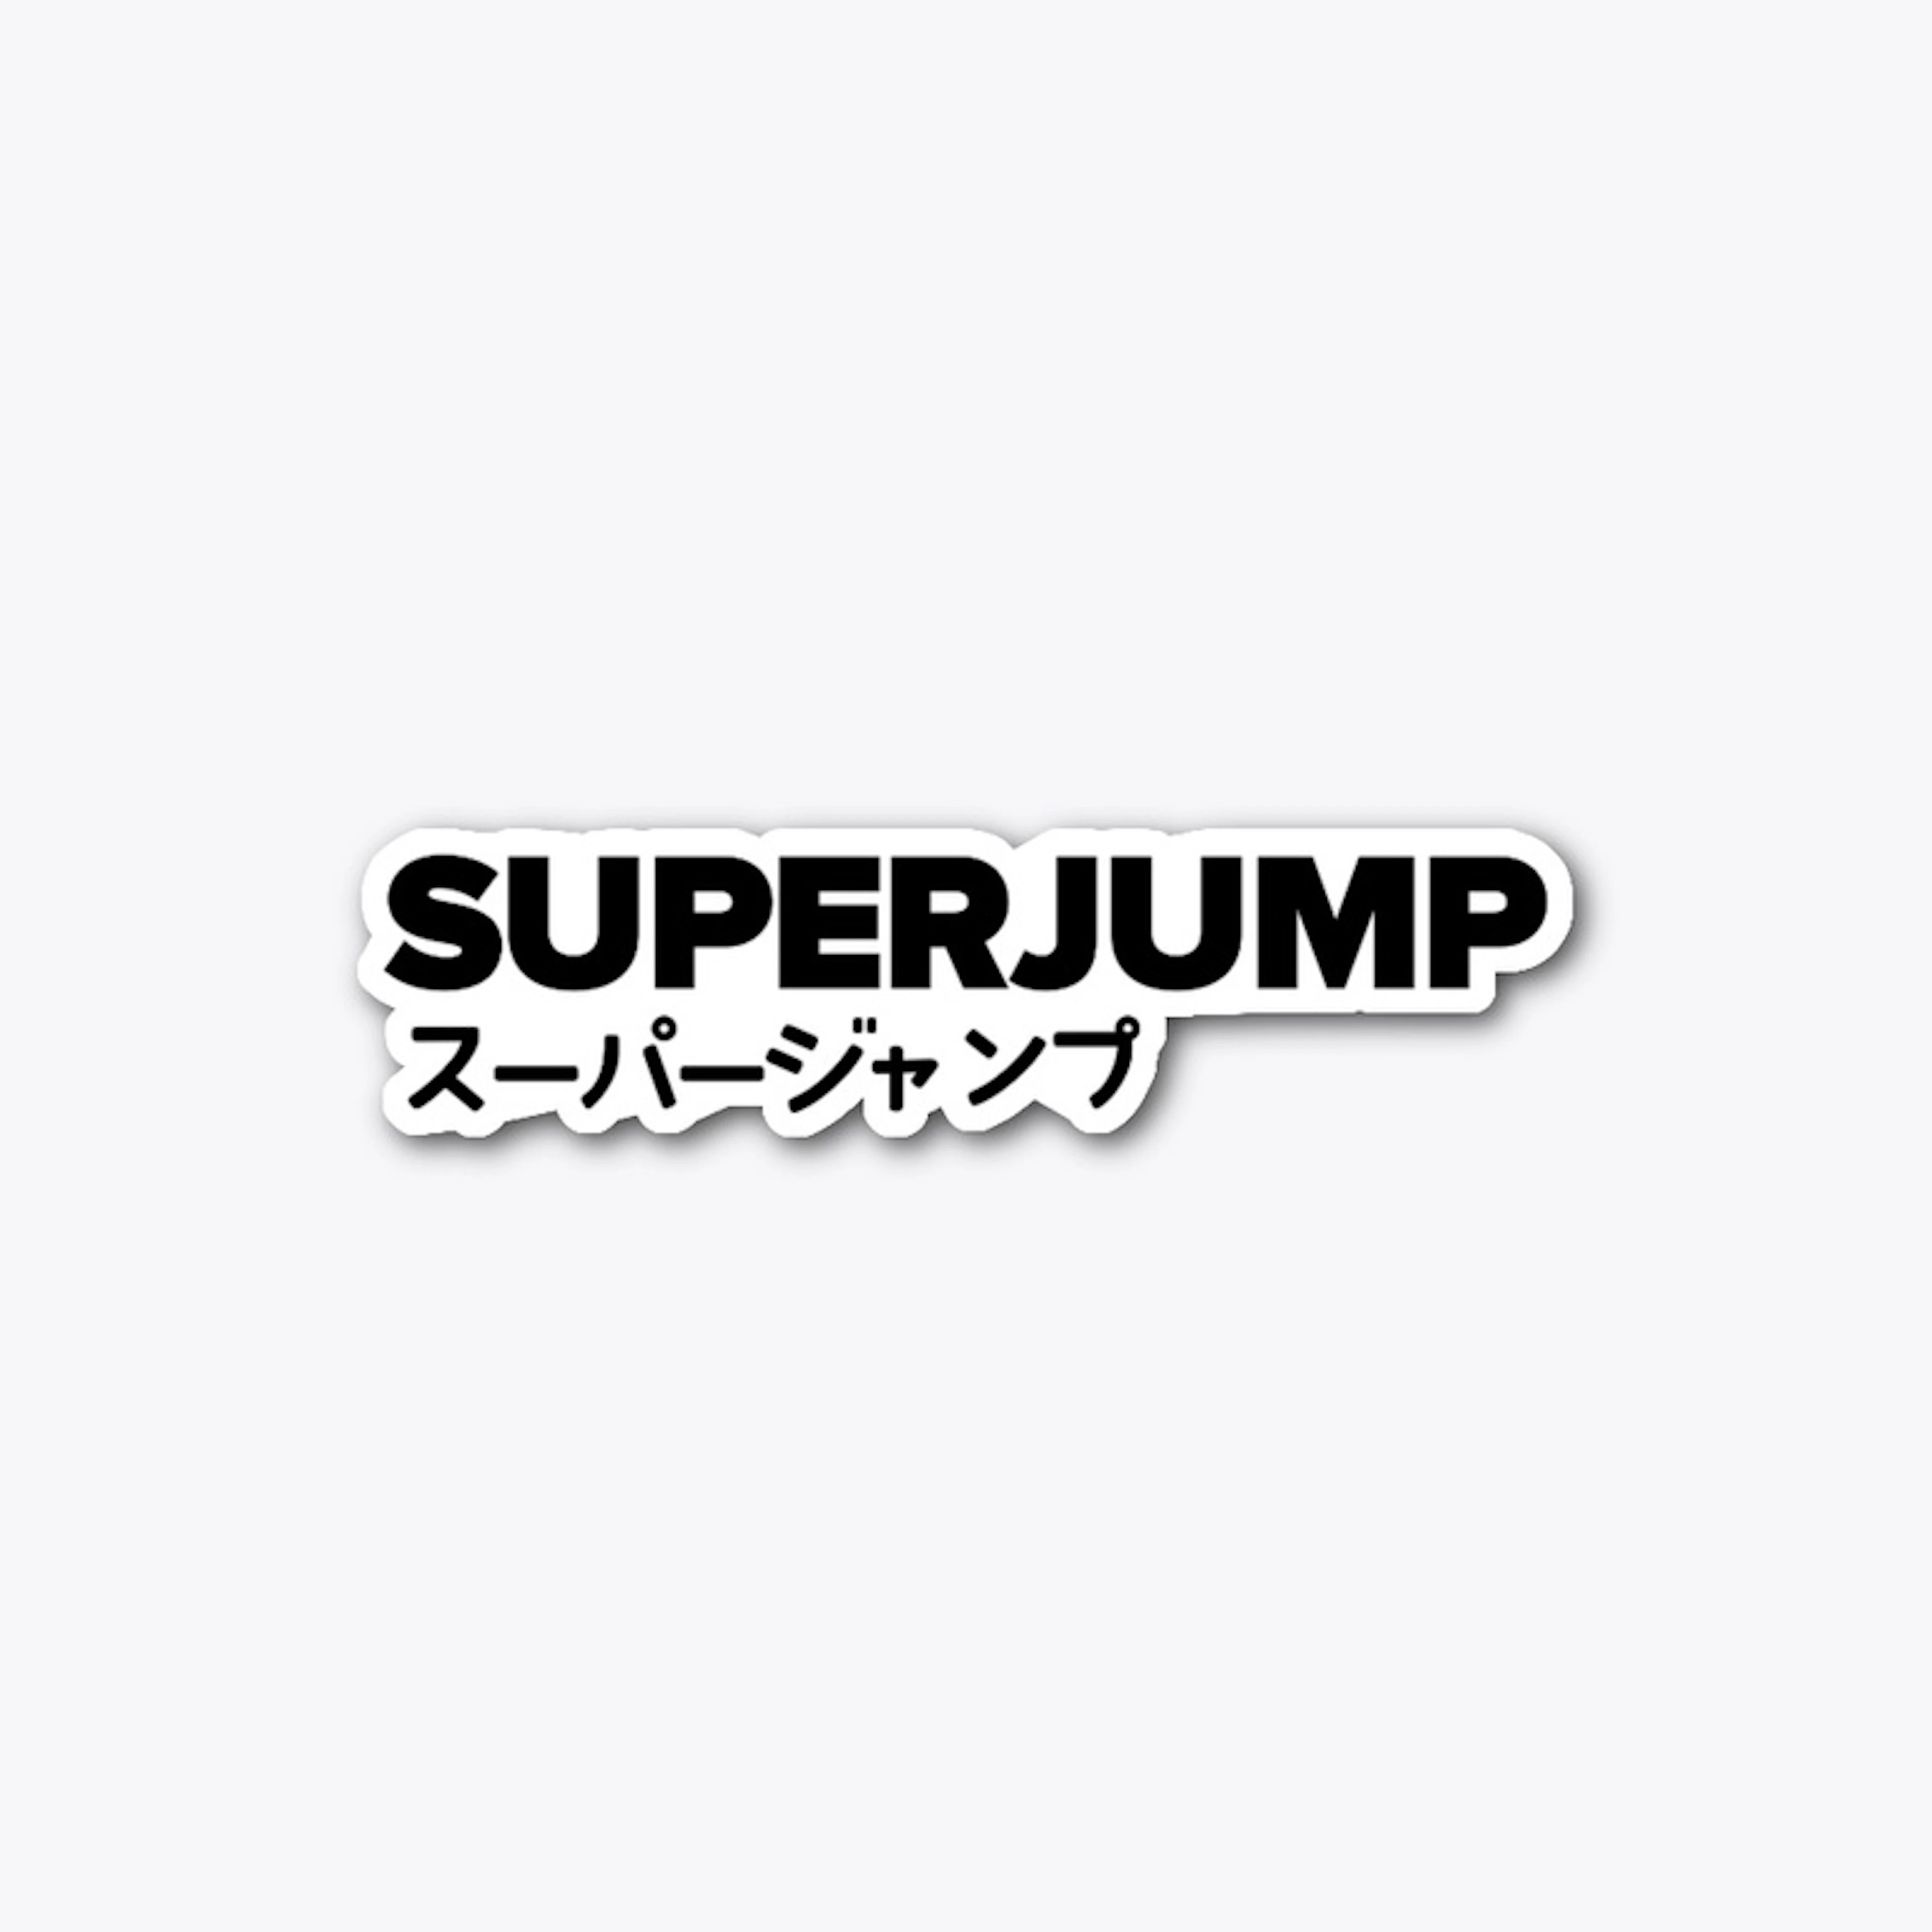 SUPERJUMP Sticker (Black Logo)